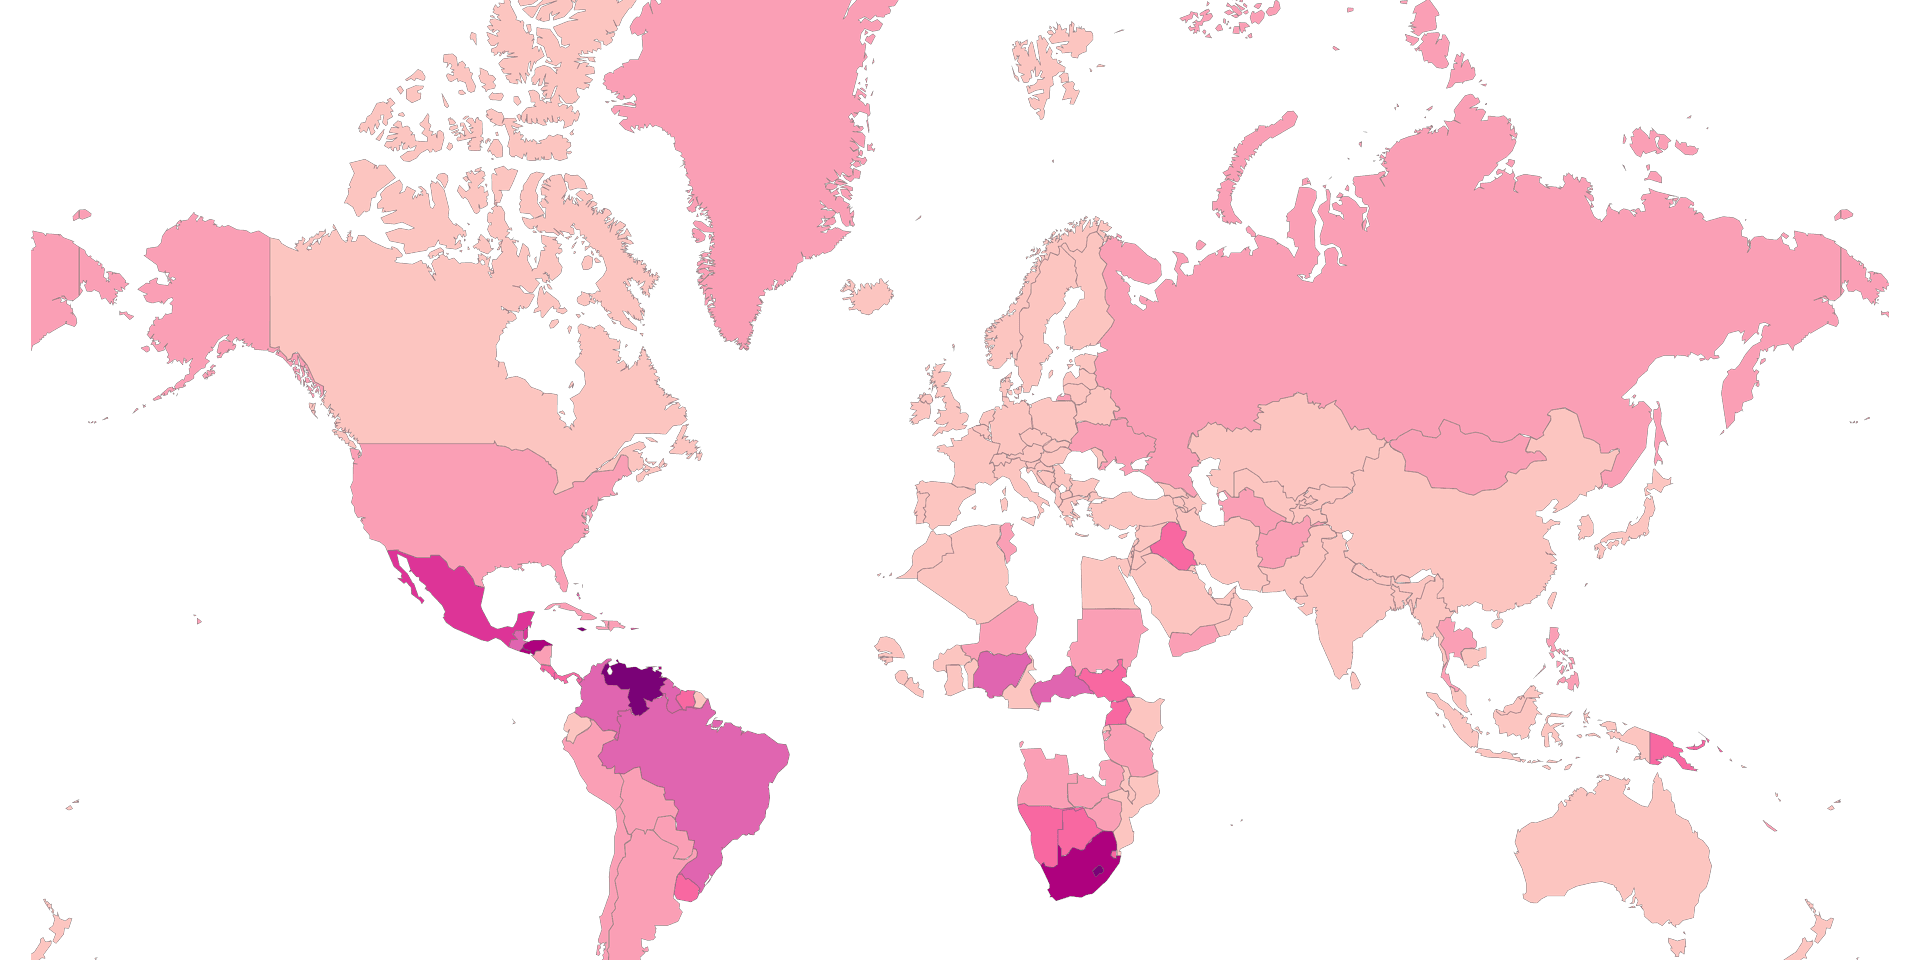 Global Murder Rate Map